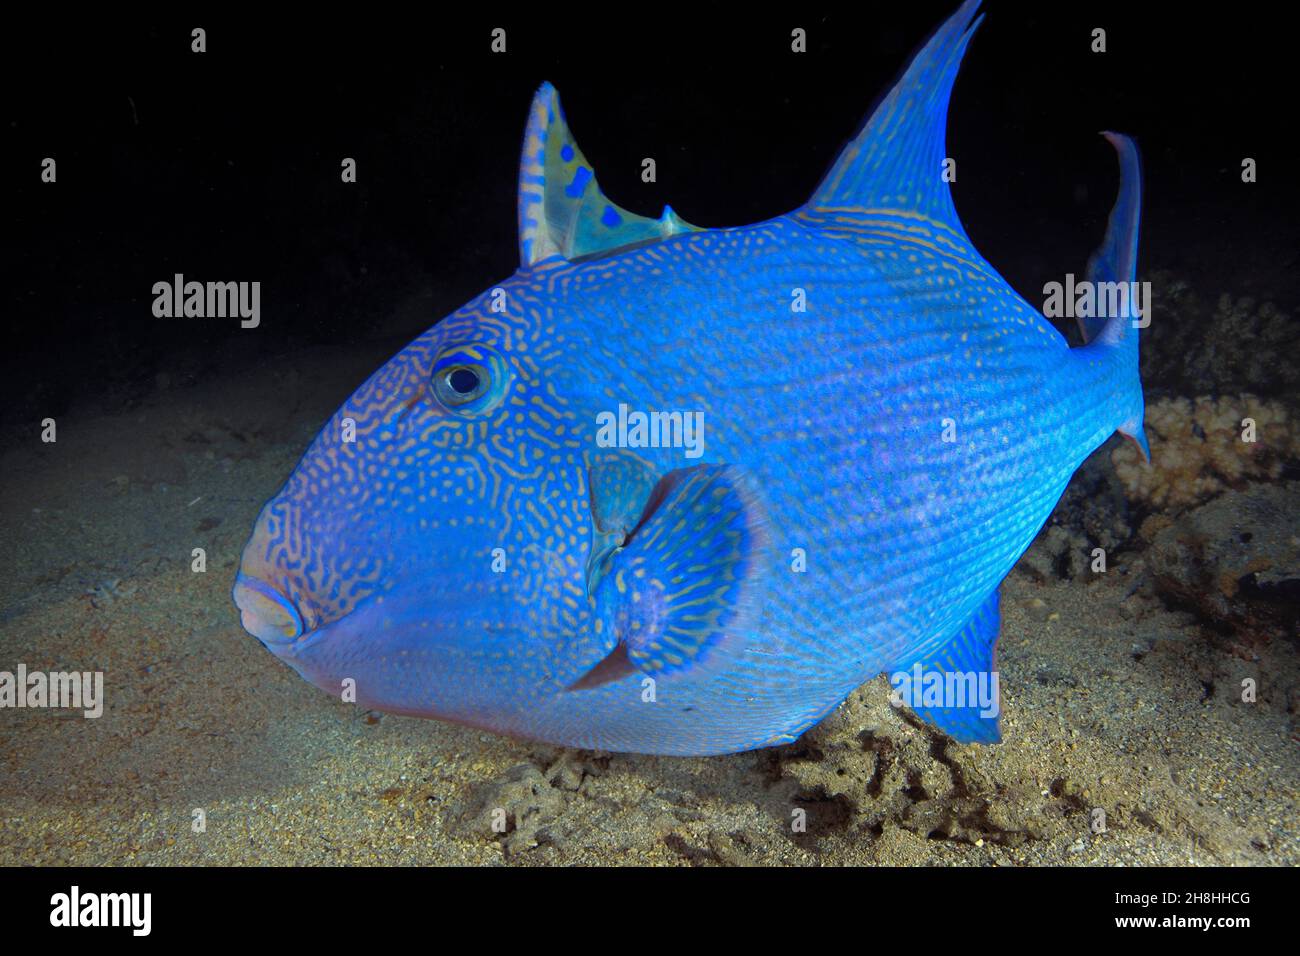 Egypt, Red Sea, a blue triggerfish (Pseudobalistes fuscus) Stock Photo